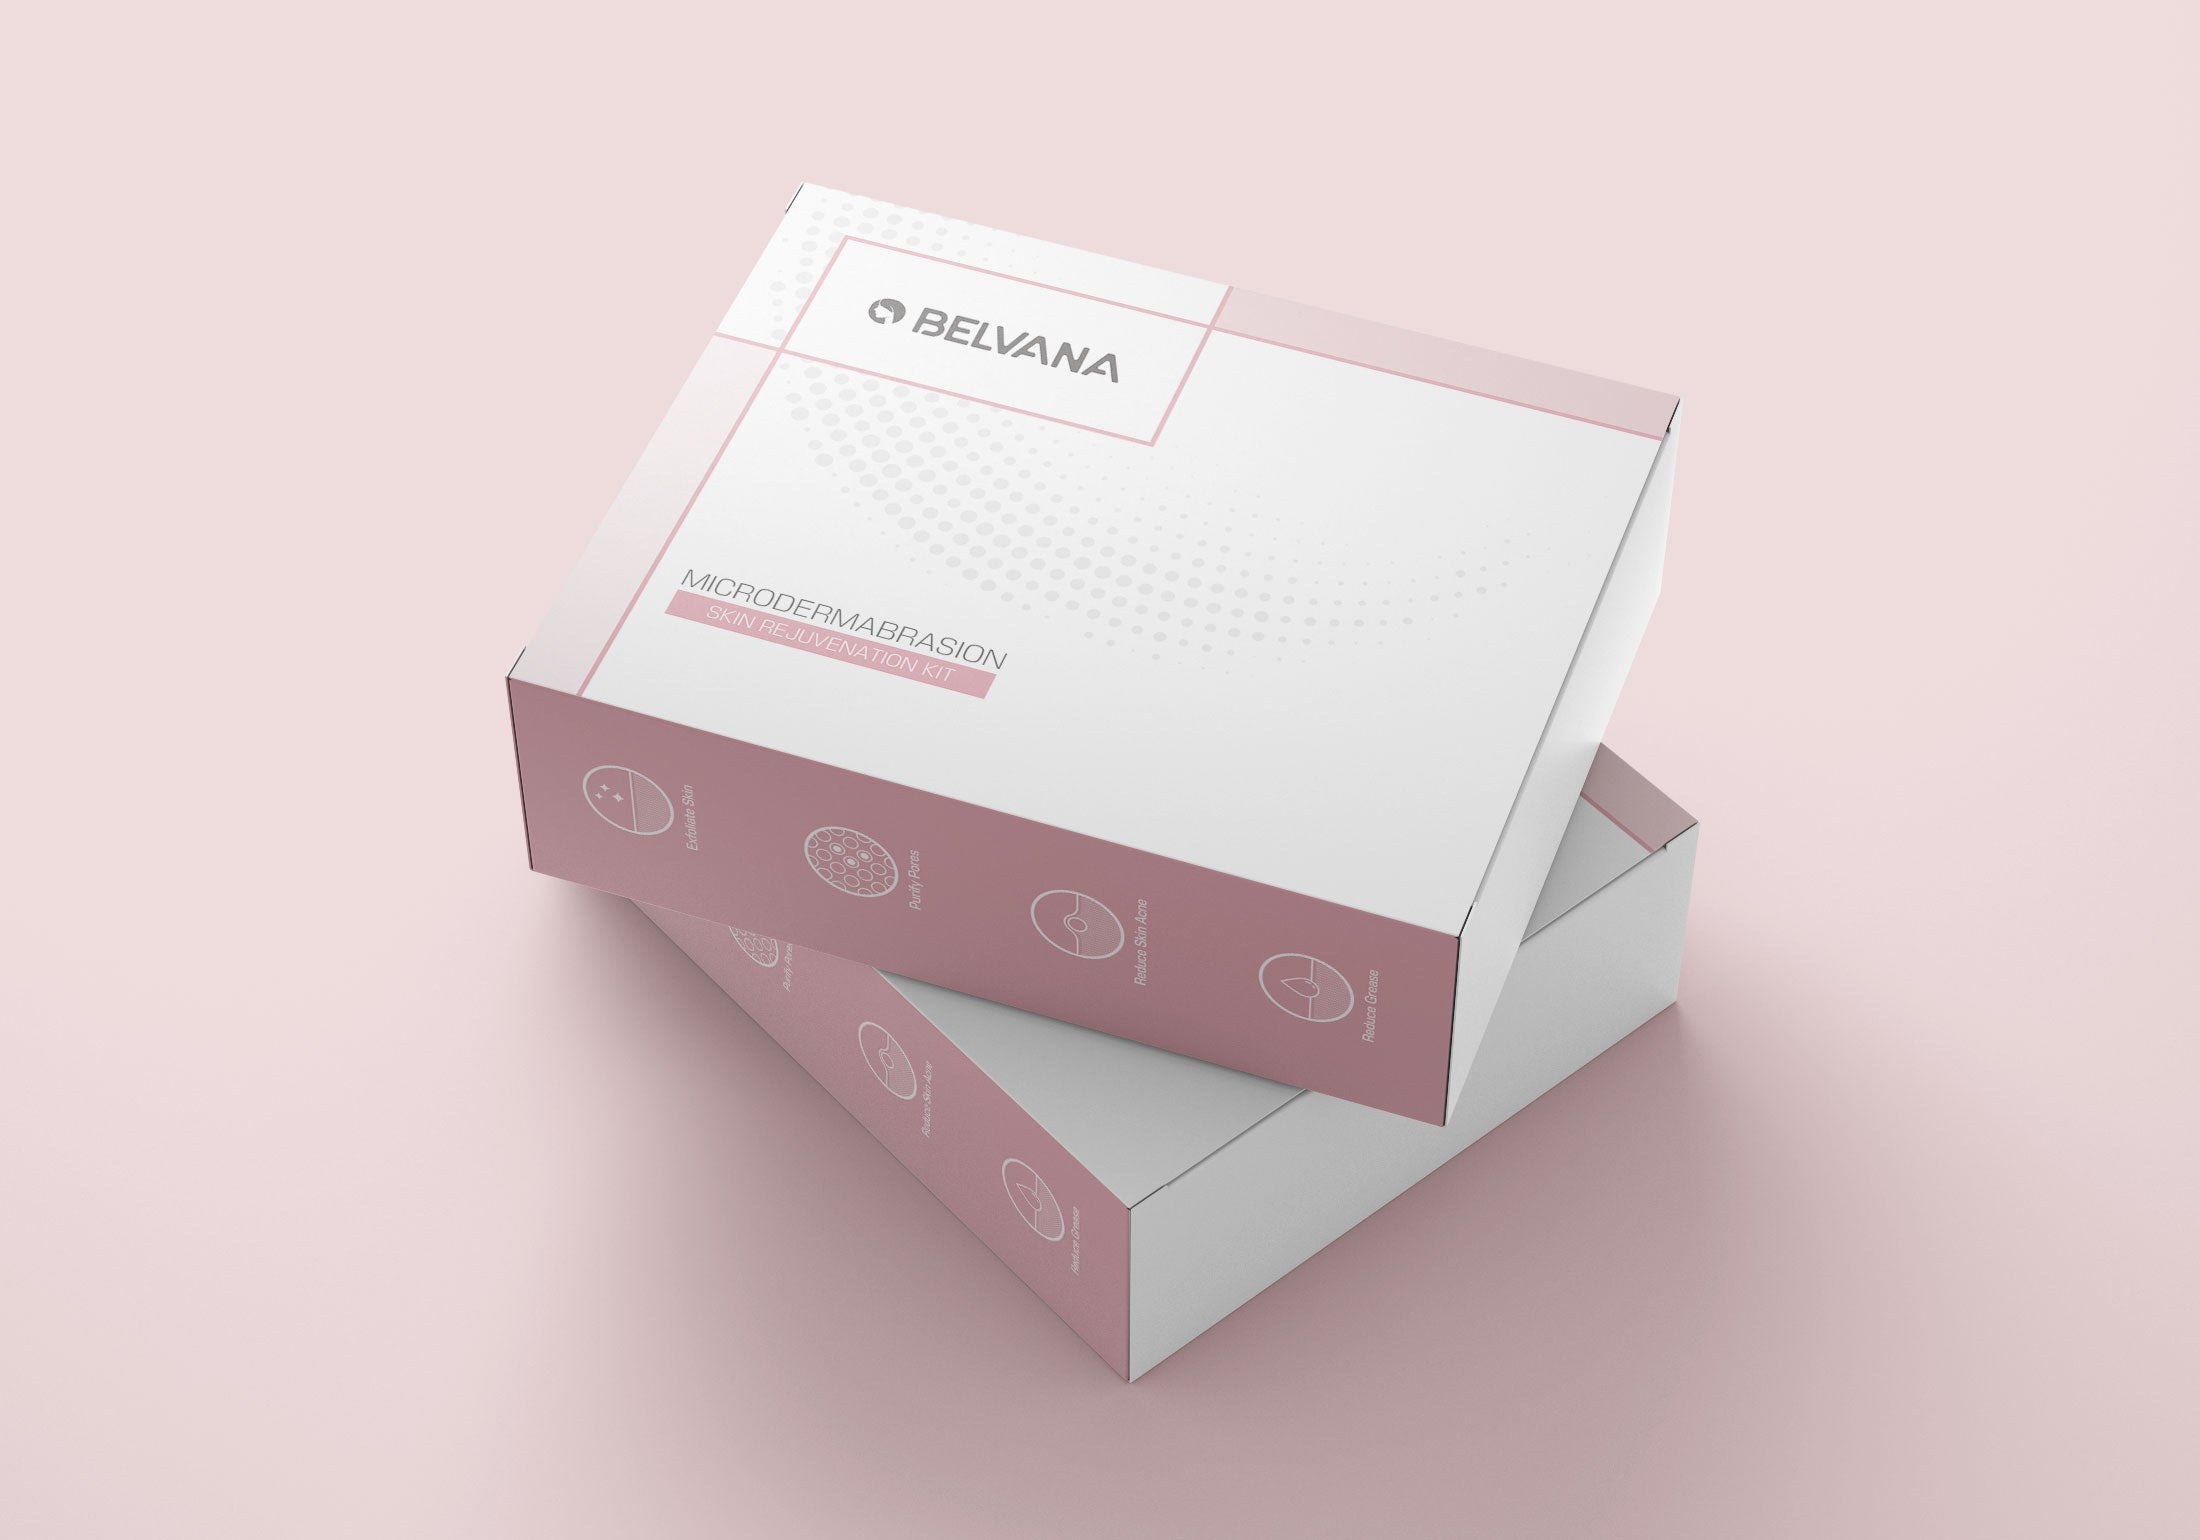 Belvana™  Microdermabrasion Rejuvenation Kit